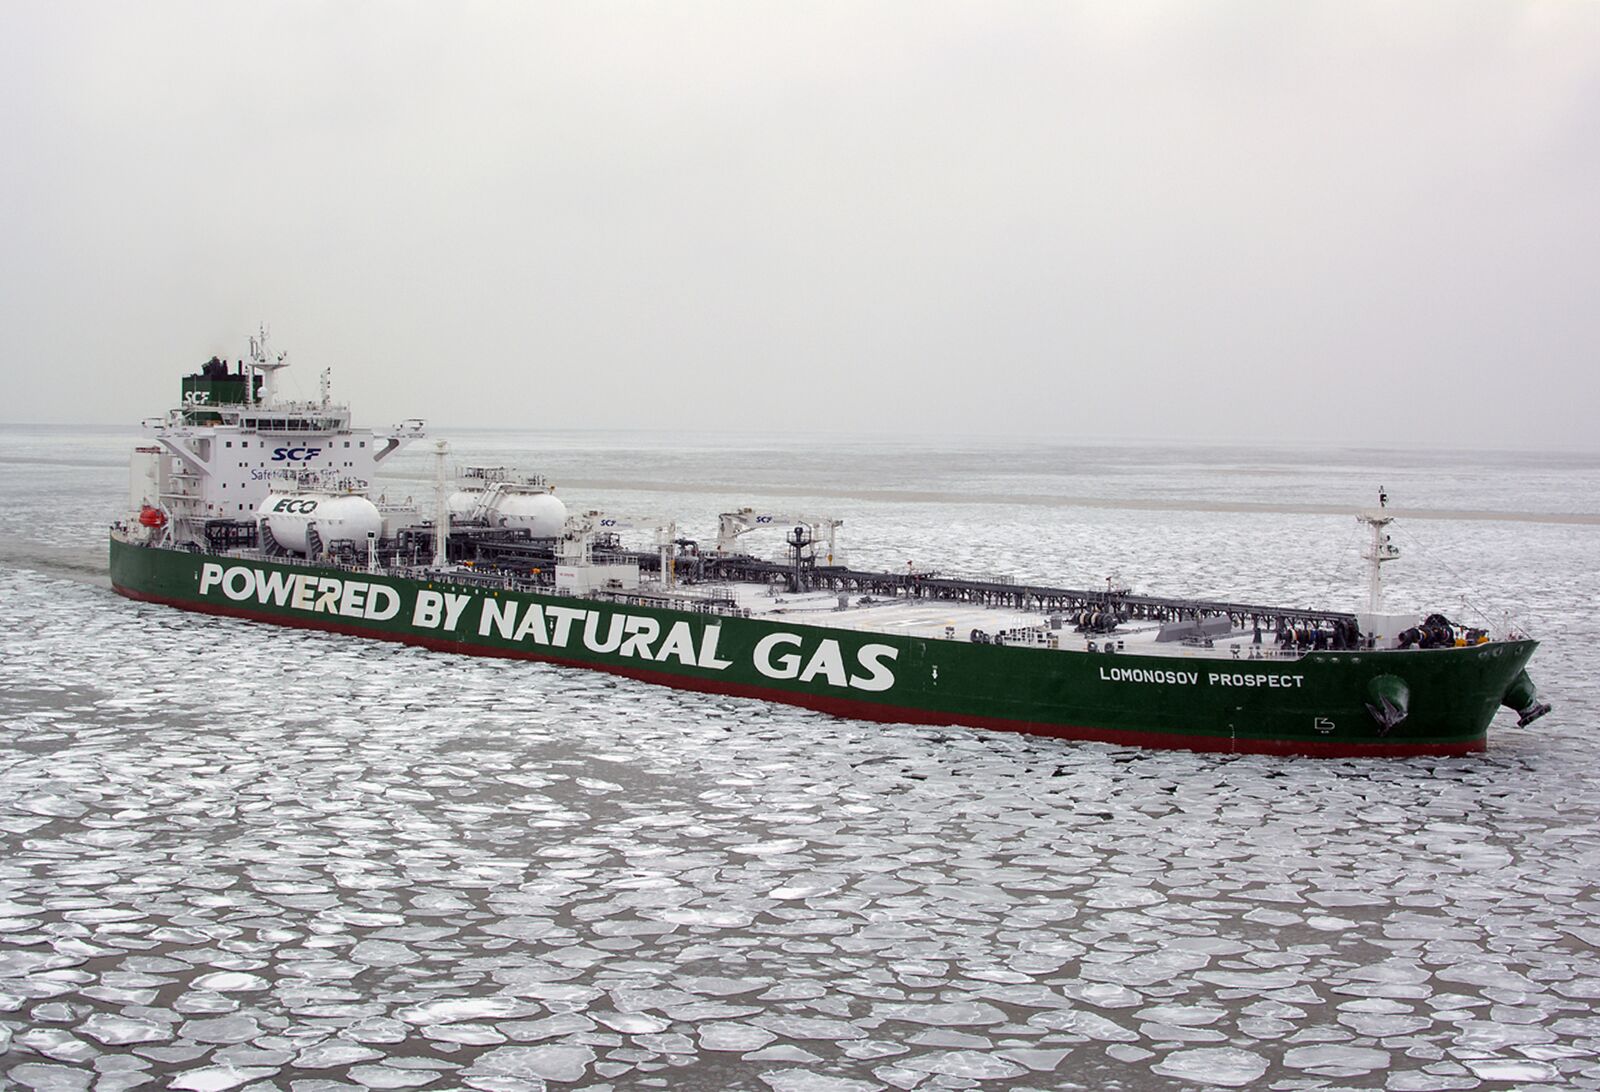 Sovcomflot's LNG-fueled Aframax completes NSR passage